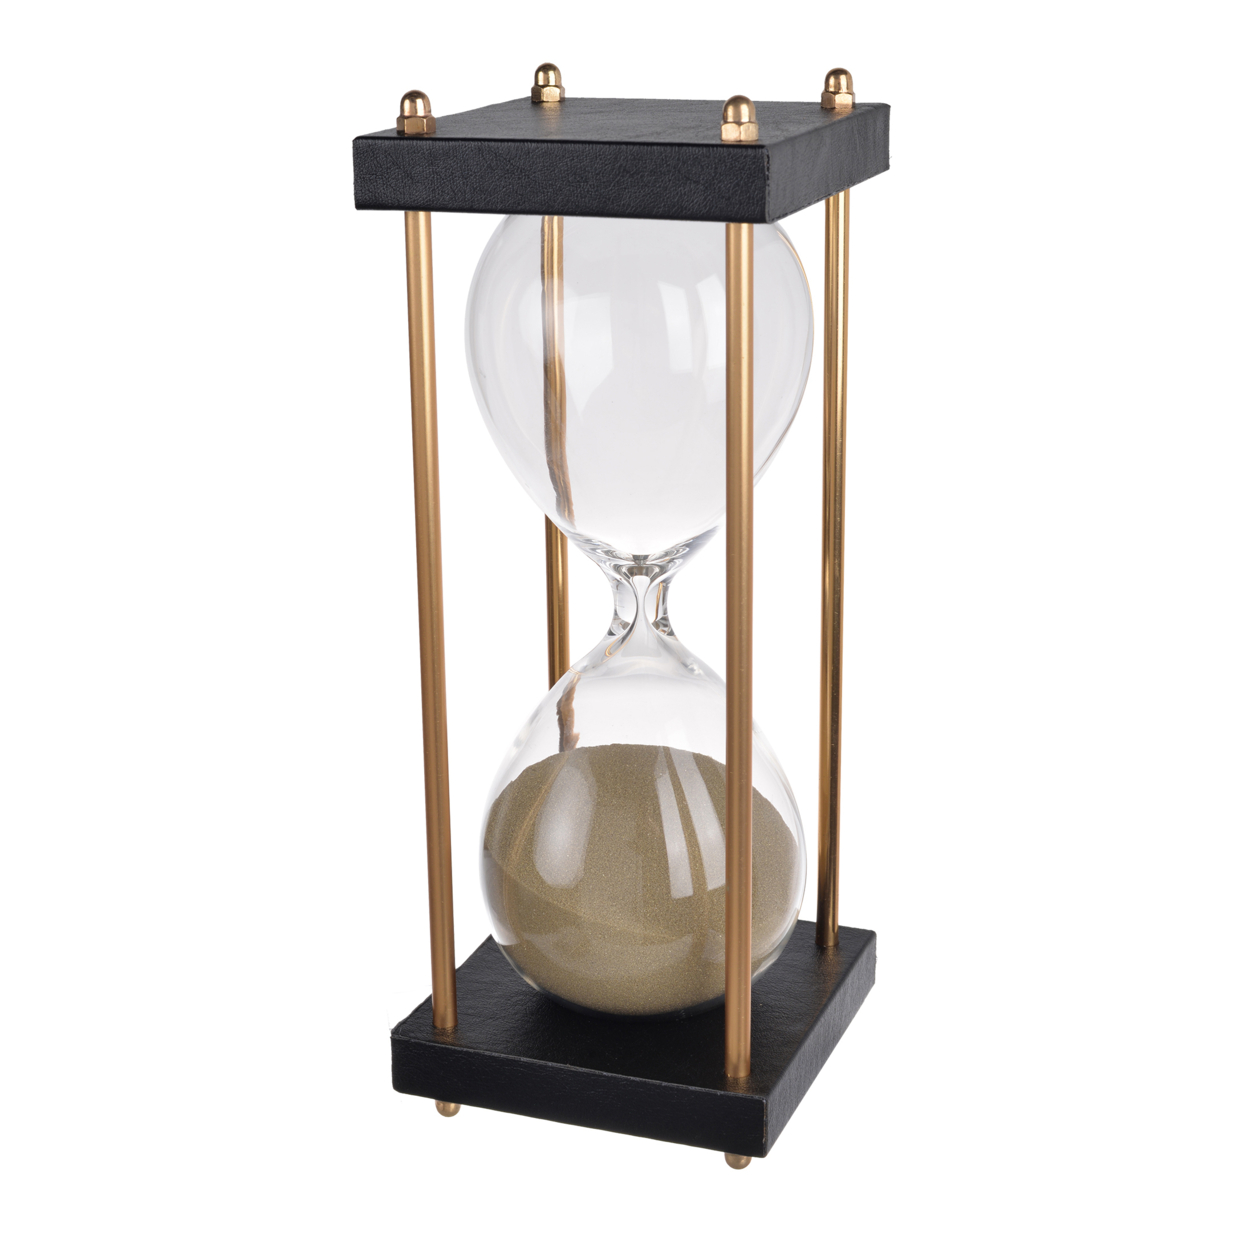 Doug Inch 60 Minute Sand Hourglass With Modern Frame Included, Black, Brown- Saltoro Sherpi